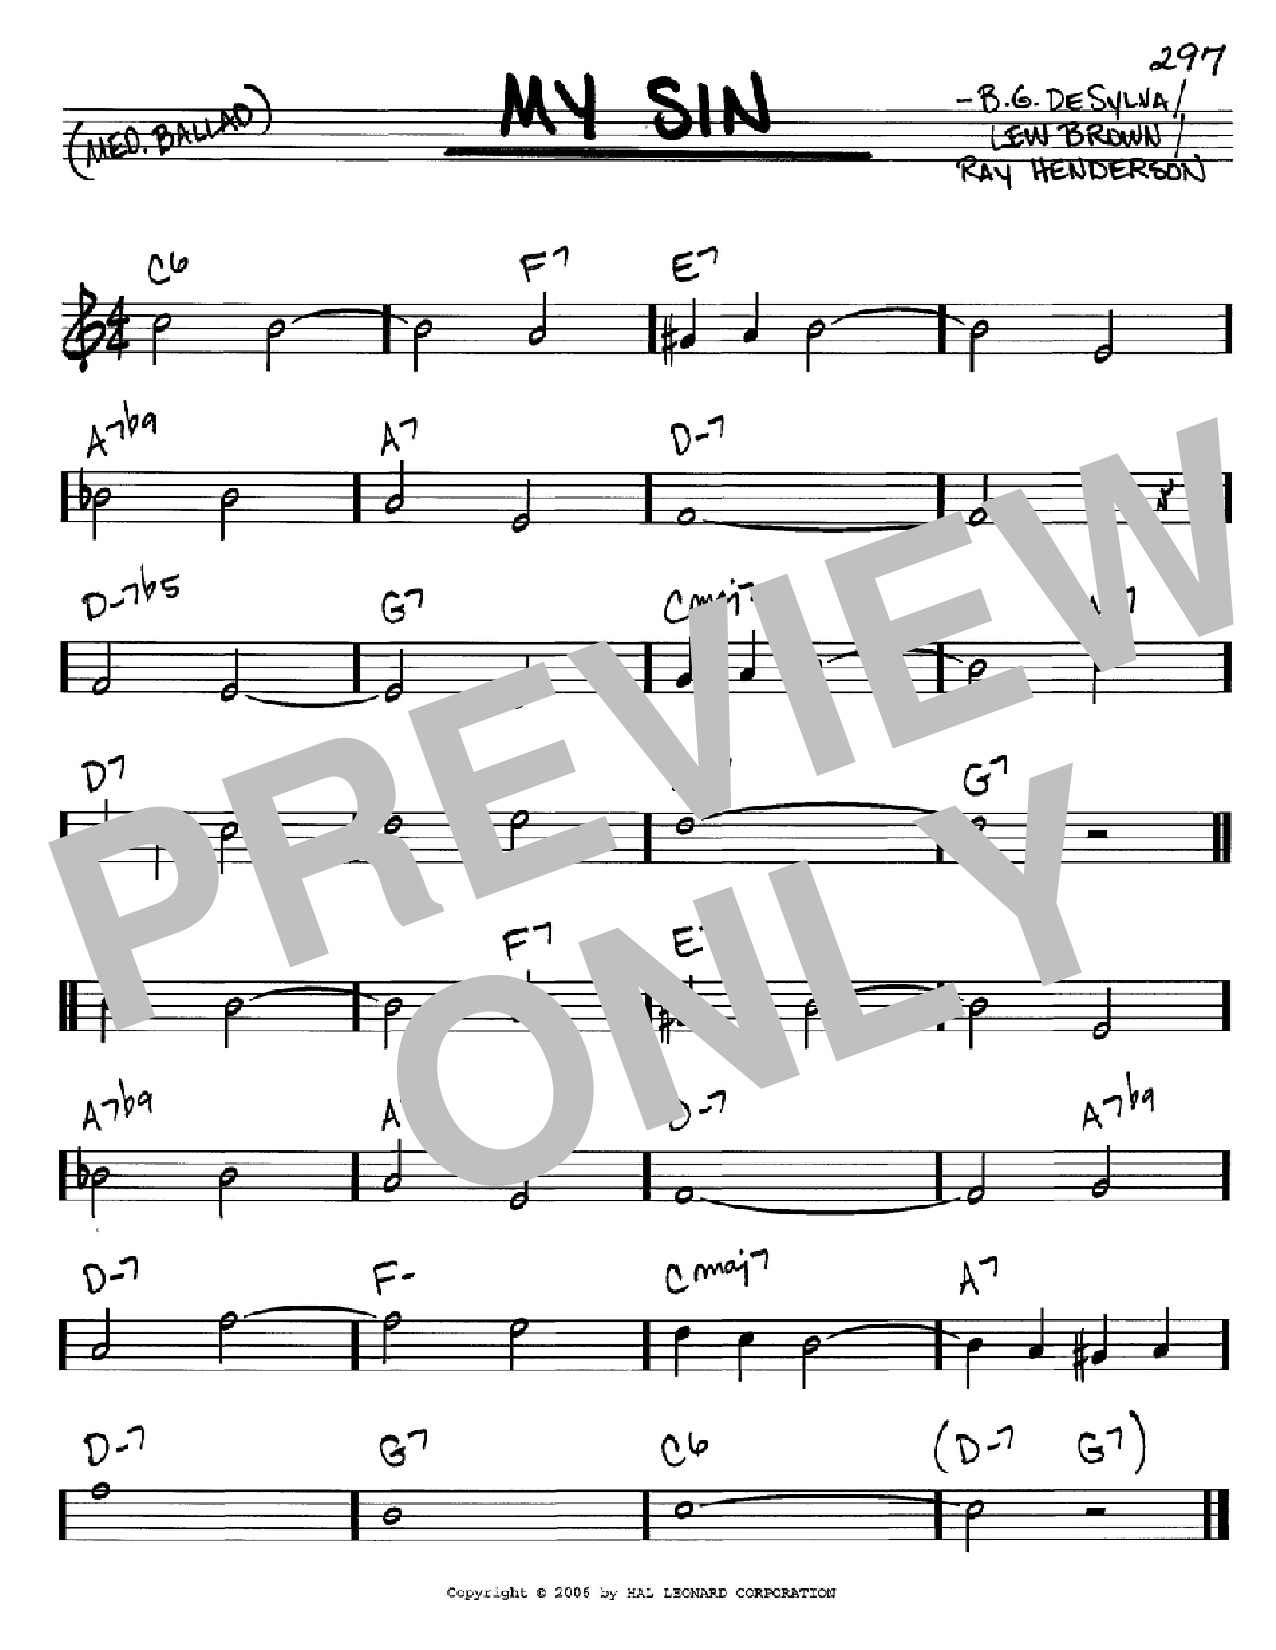 B.G. DeSylva My Sin Sheet Music Notes & Chords for Piano, Vocal & Guitar (Right-Hand Melody) - Download or Print PDF